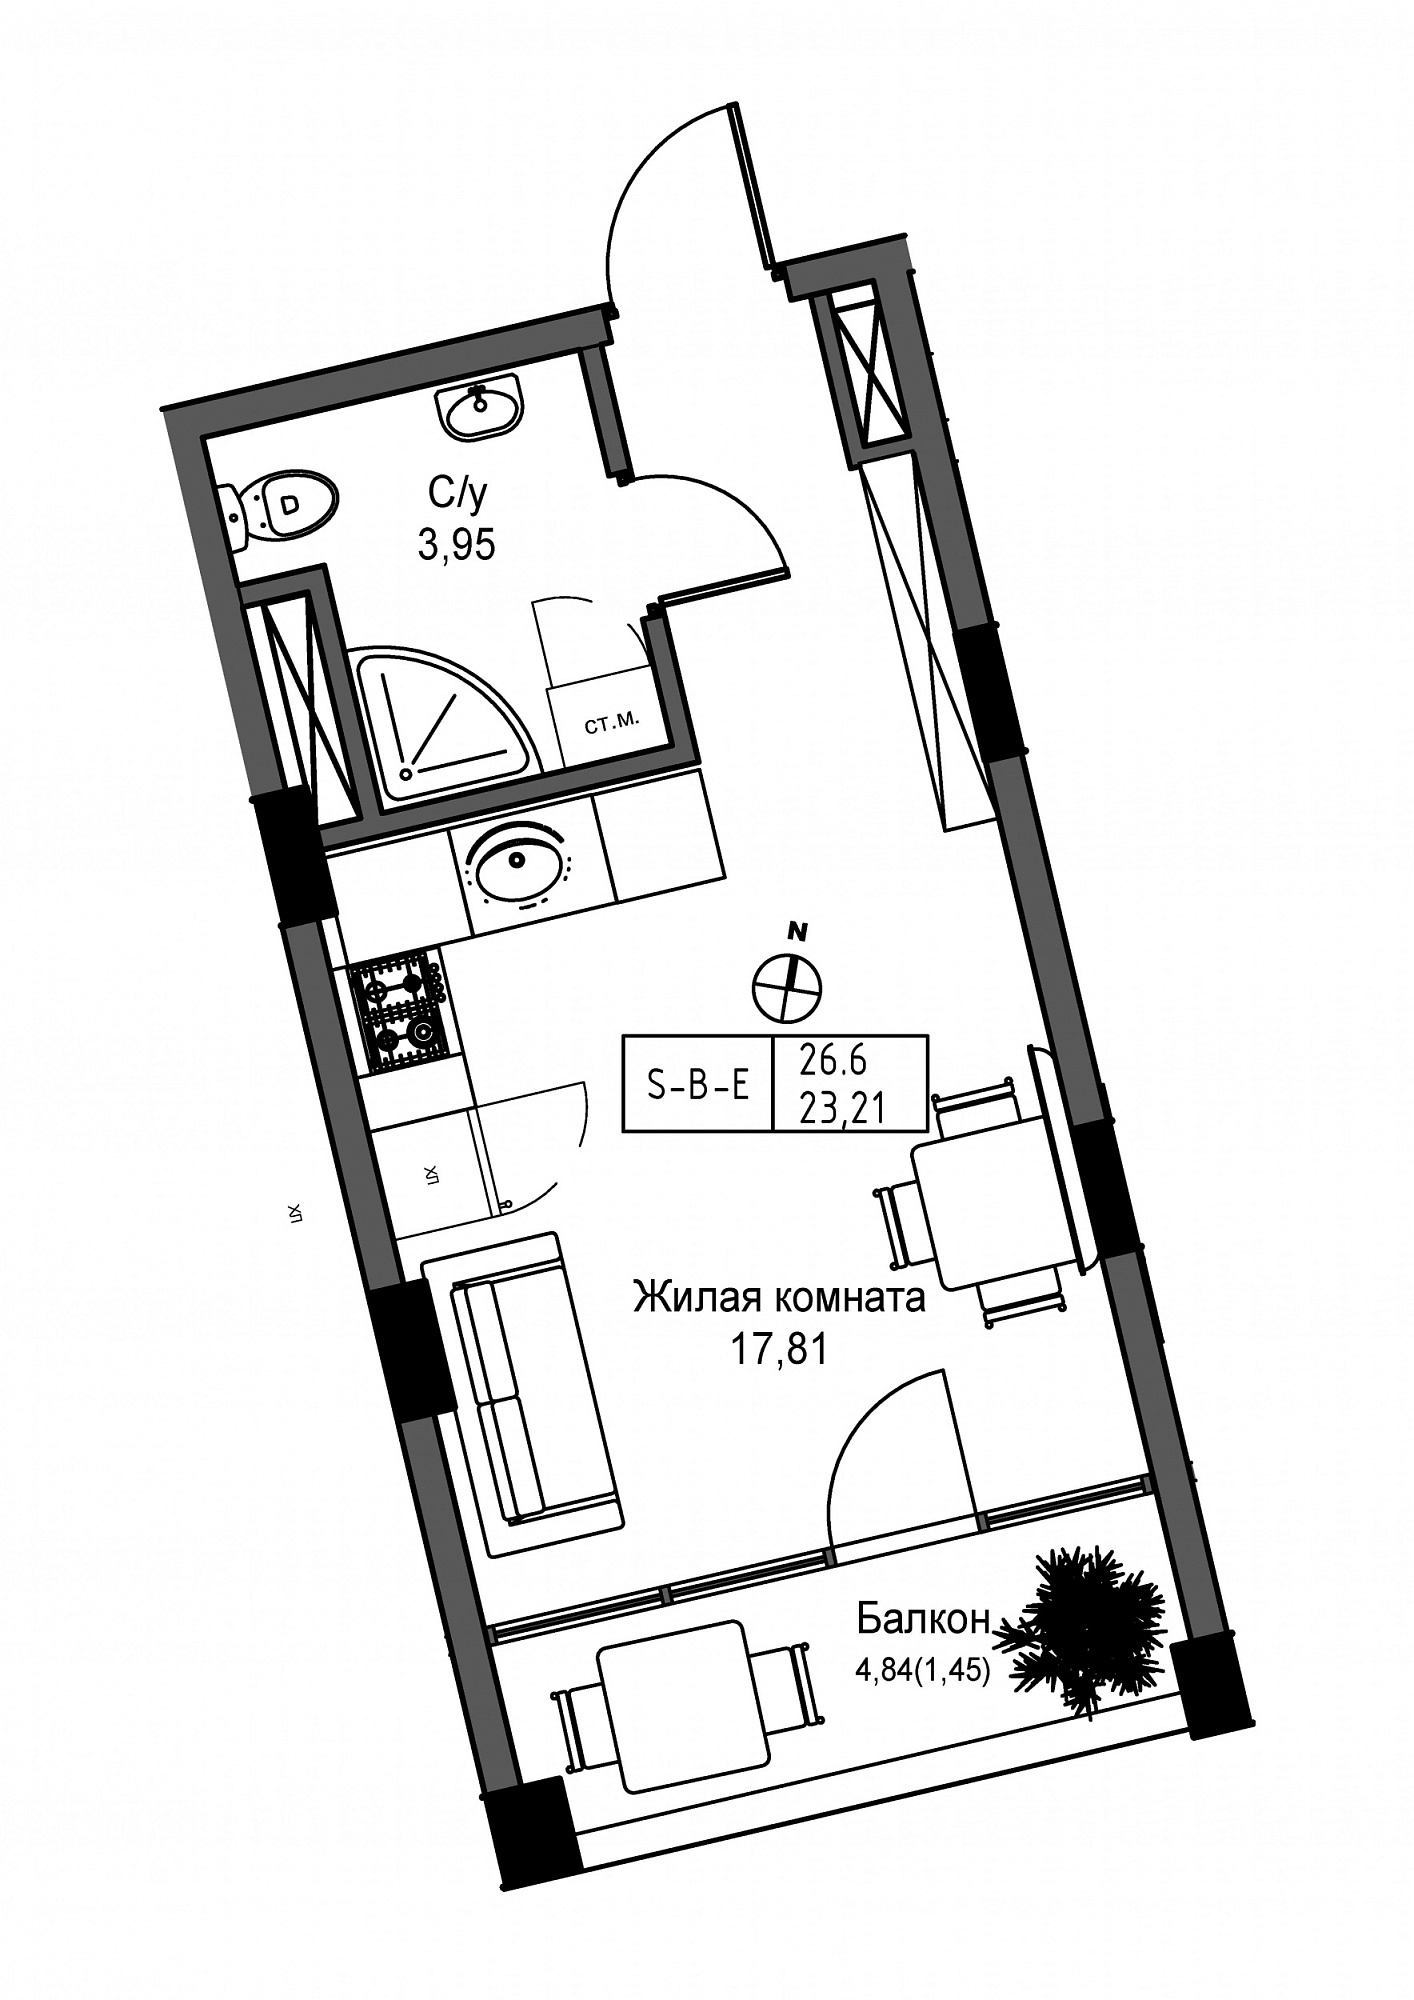 Планування Smart-квартира площею 23.21м2, UM-004-04/0009.